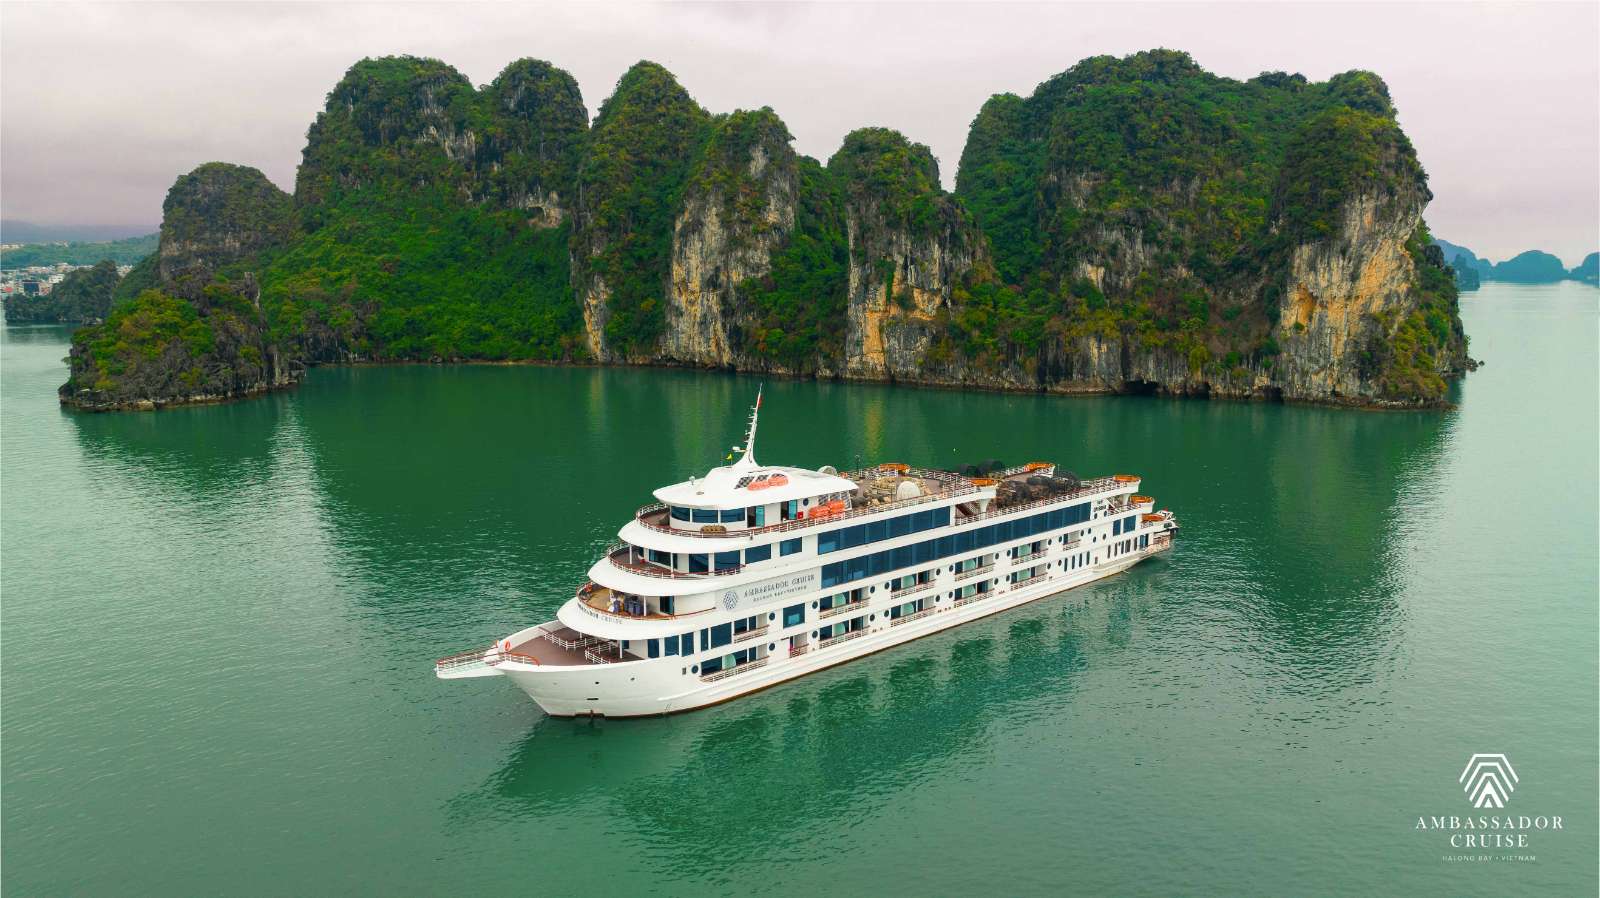 Ambassador Cruise II, Ambassador Cruise, du thuyền 5 sao, du thuyền, Vịnh Hạ Long, du lịch Vinh Hạ Long